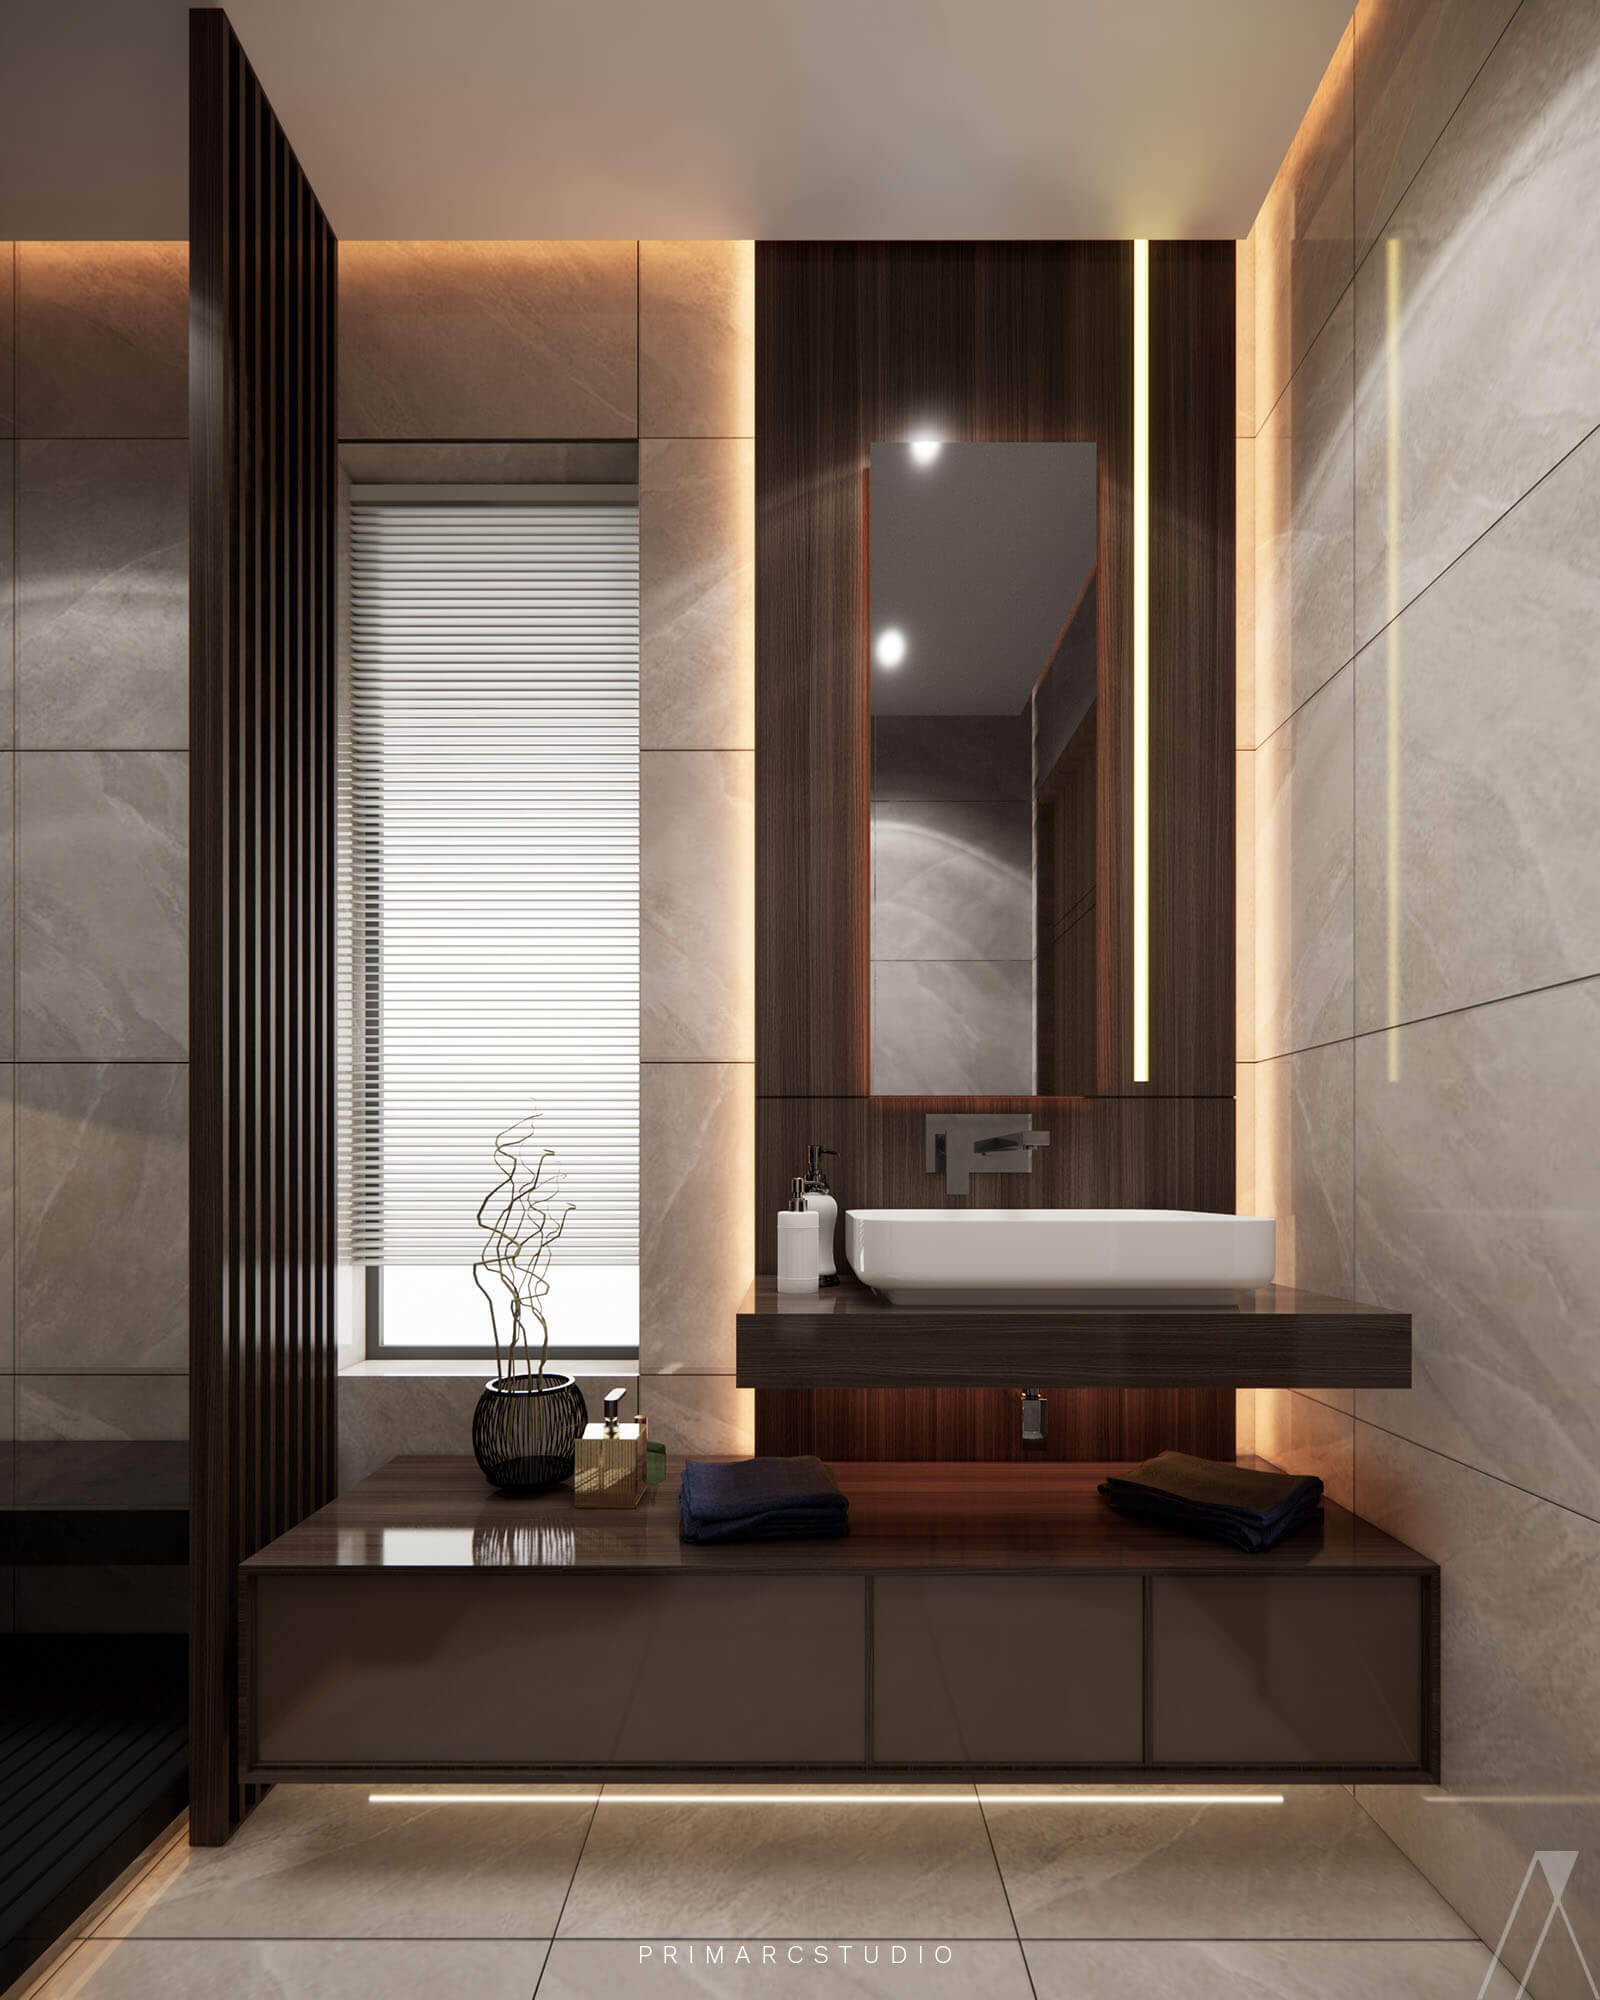 Washroom interior design sink design in wooden and beige colors